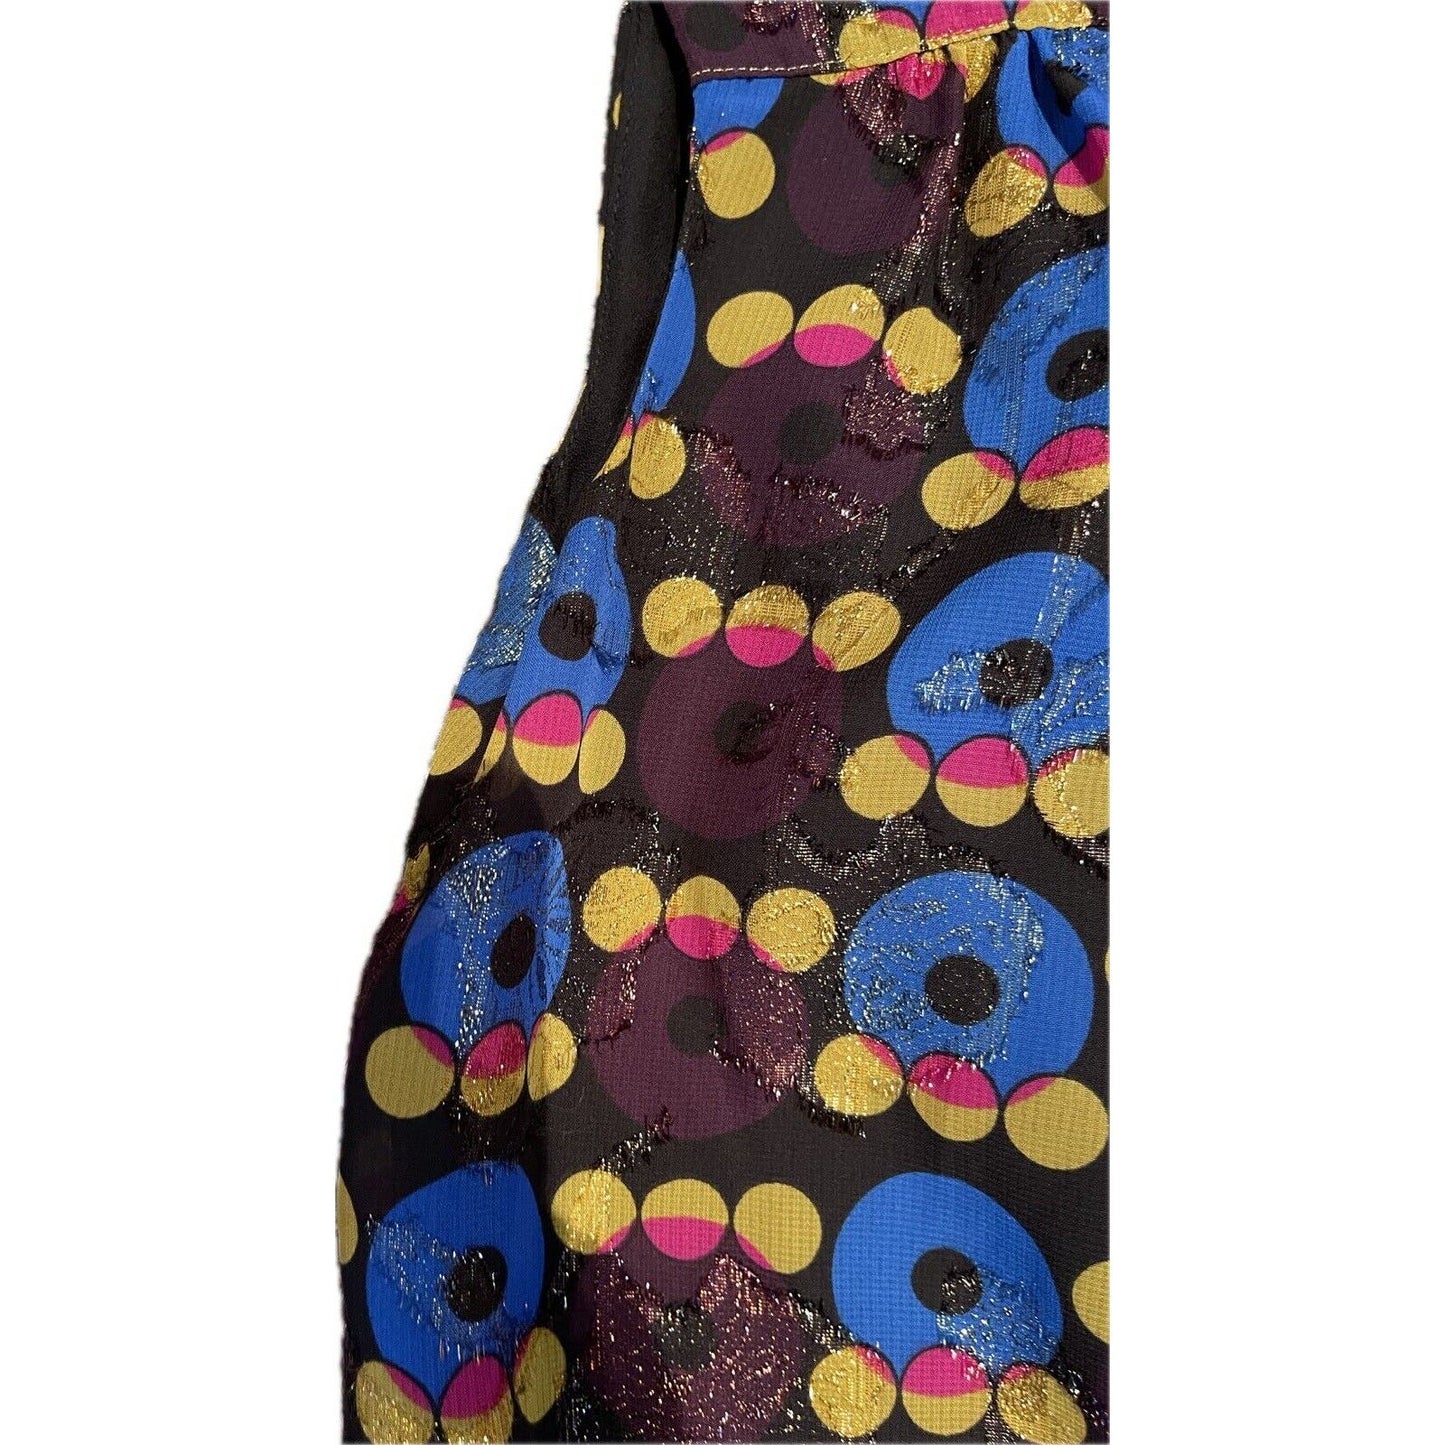 Anna Sui x Target Multicolor Metallic Mod Sleeveless Dress Size XS